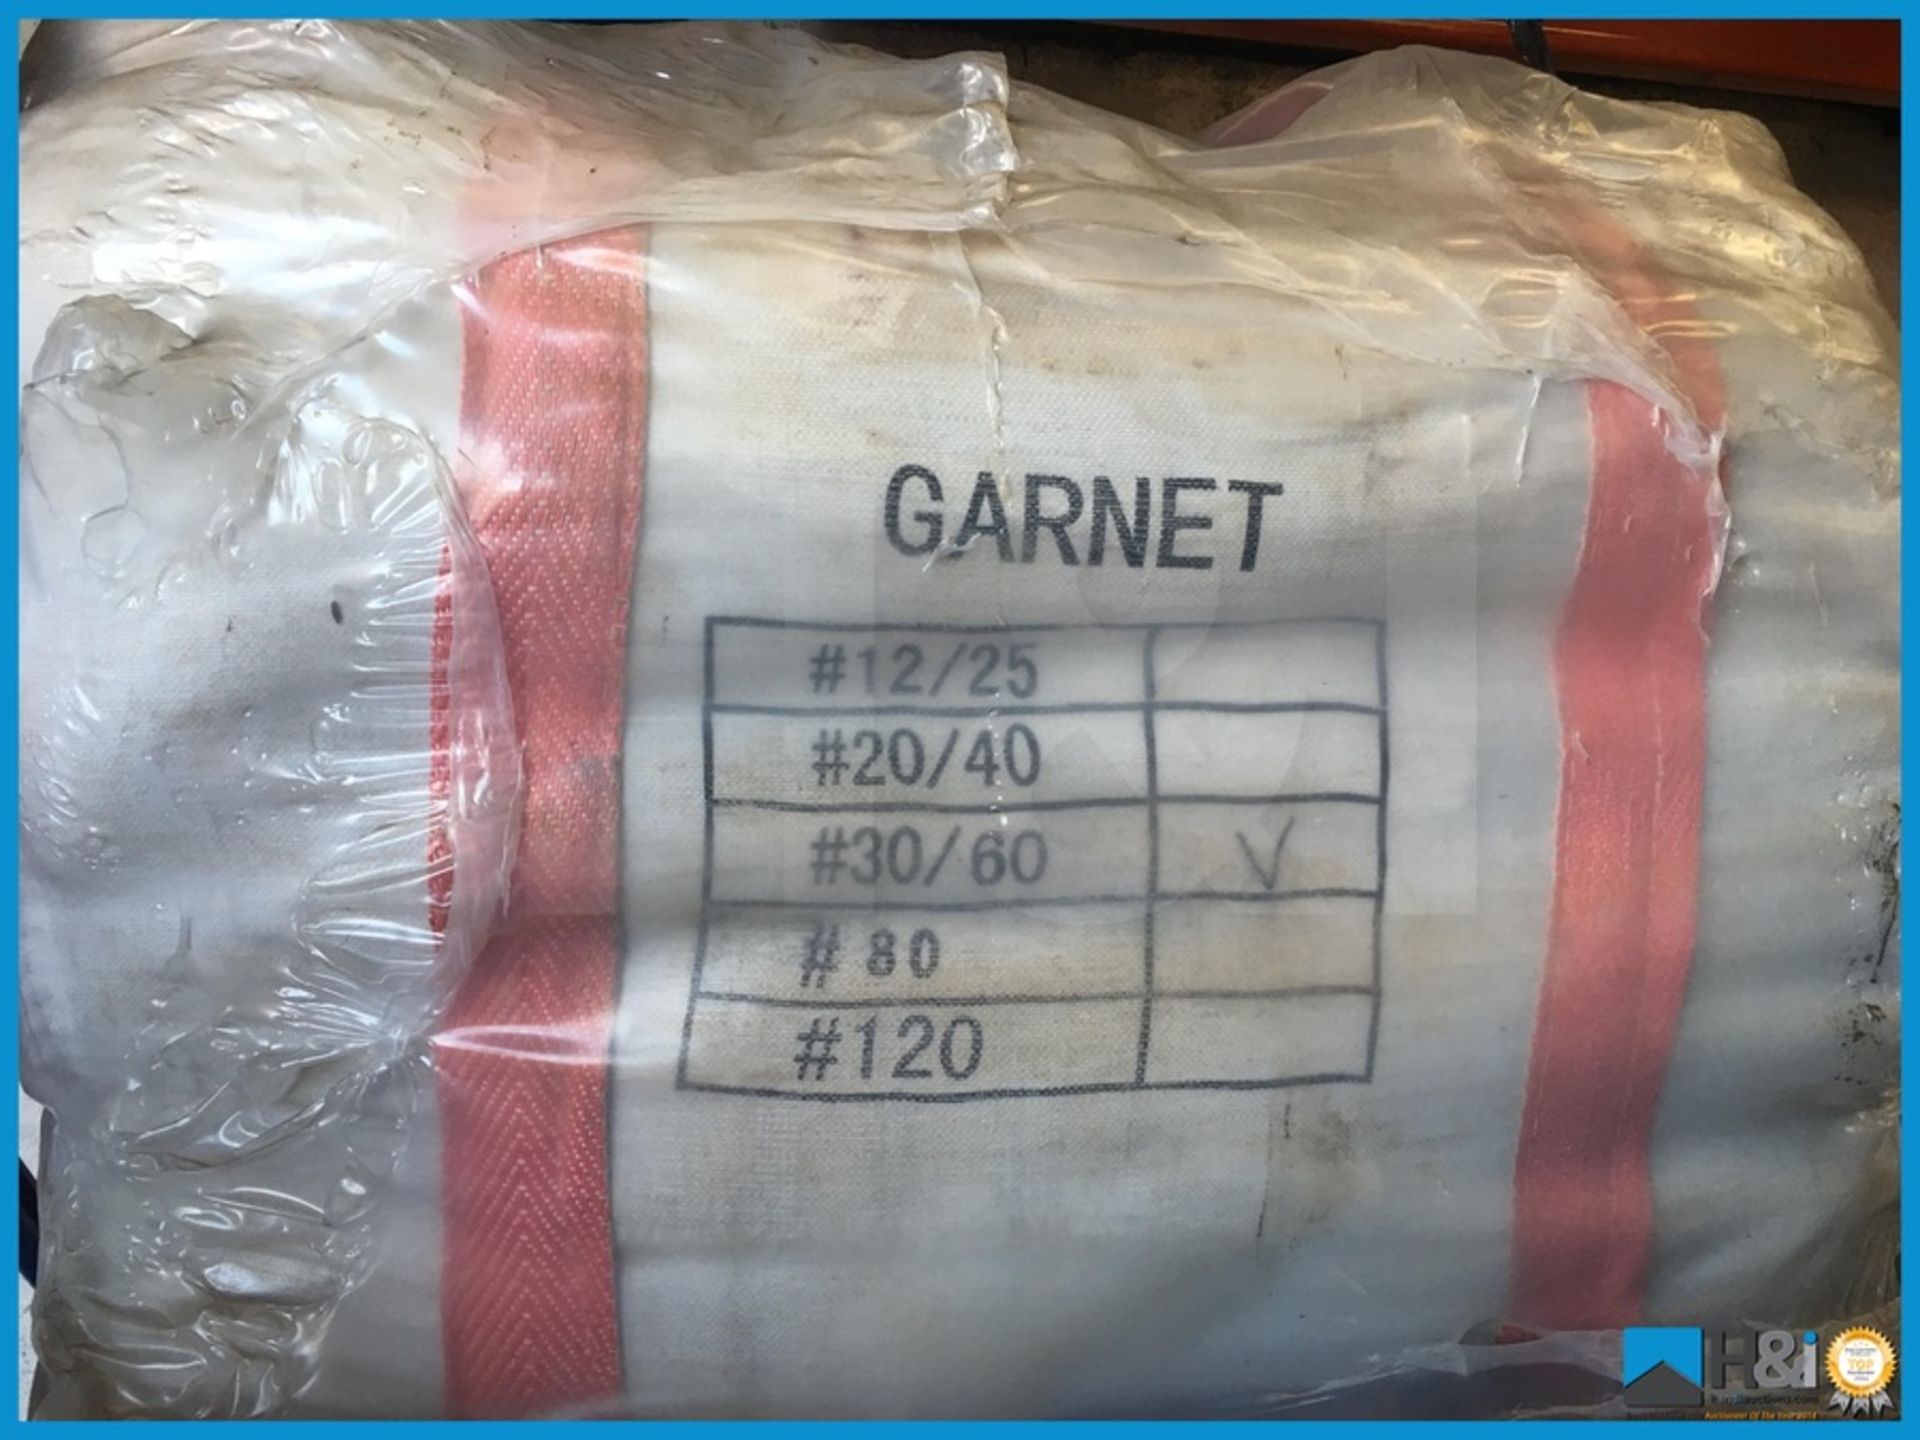 1 x 1 tonne bag of MBN Almandine Garnet.Grades: Mesh 12-20, 16-20, 20-40, 30-60, 80, 120Water